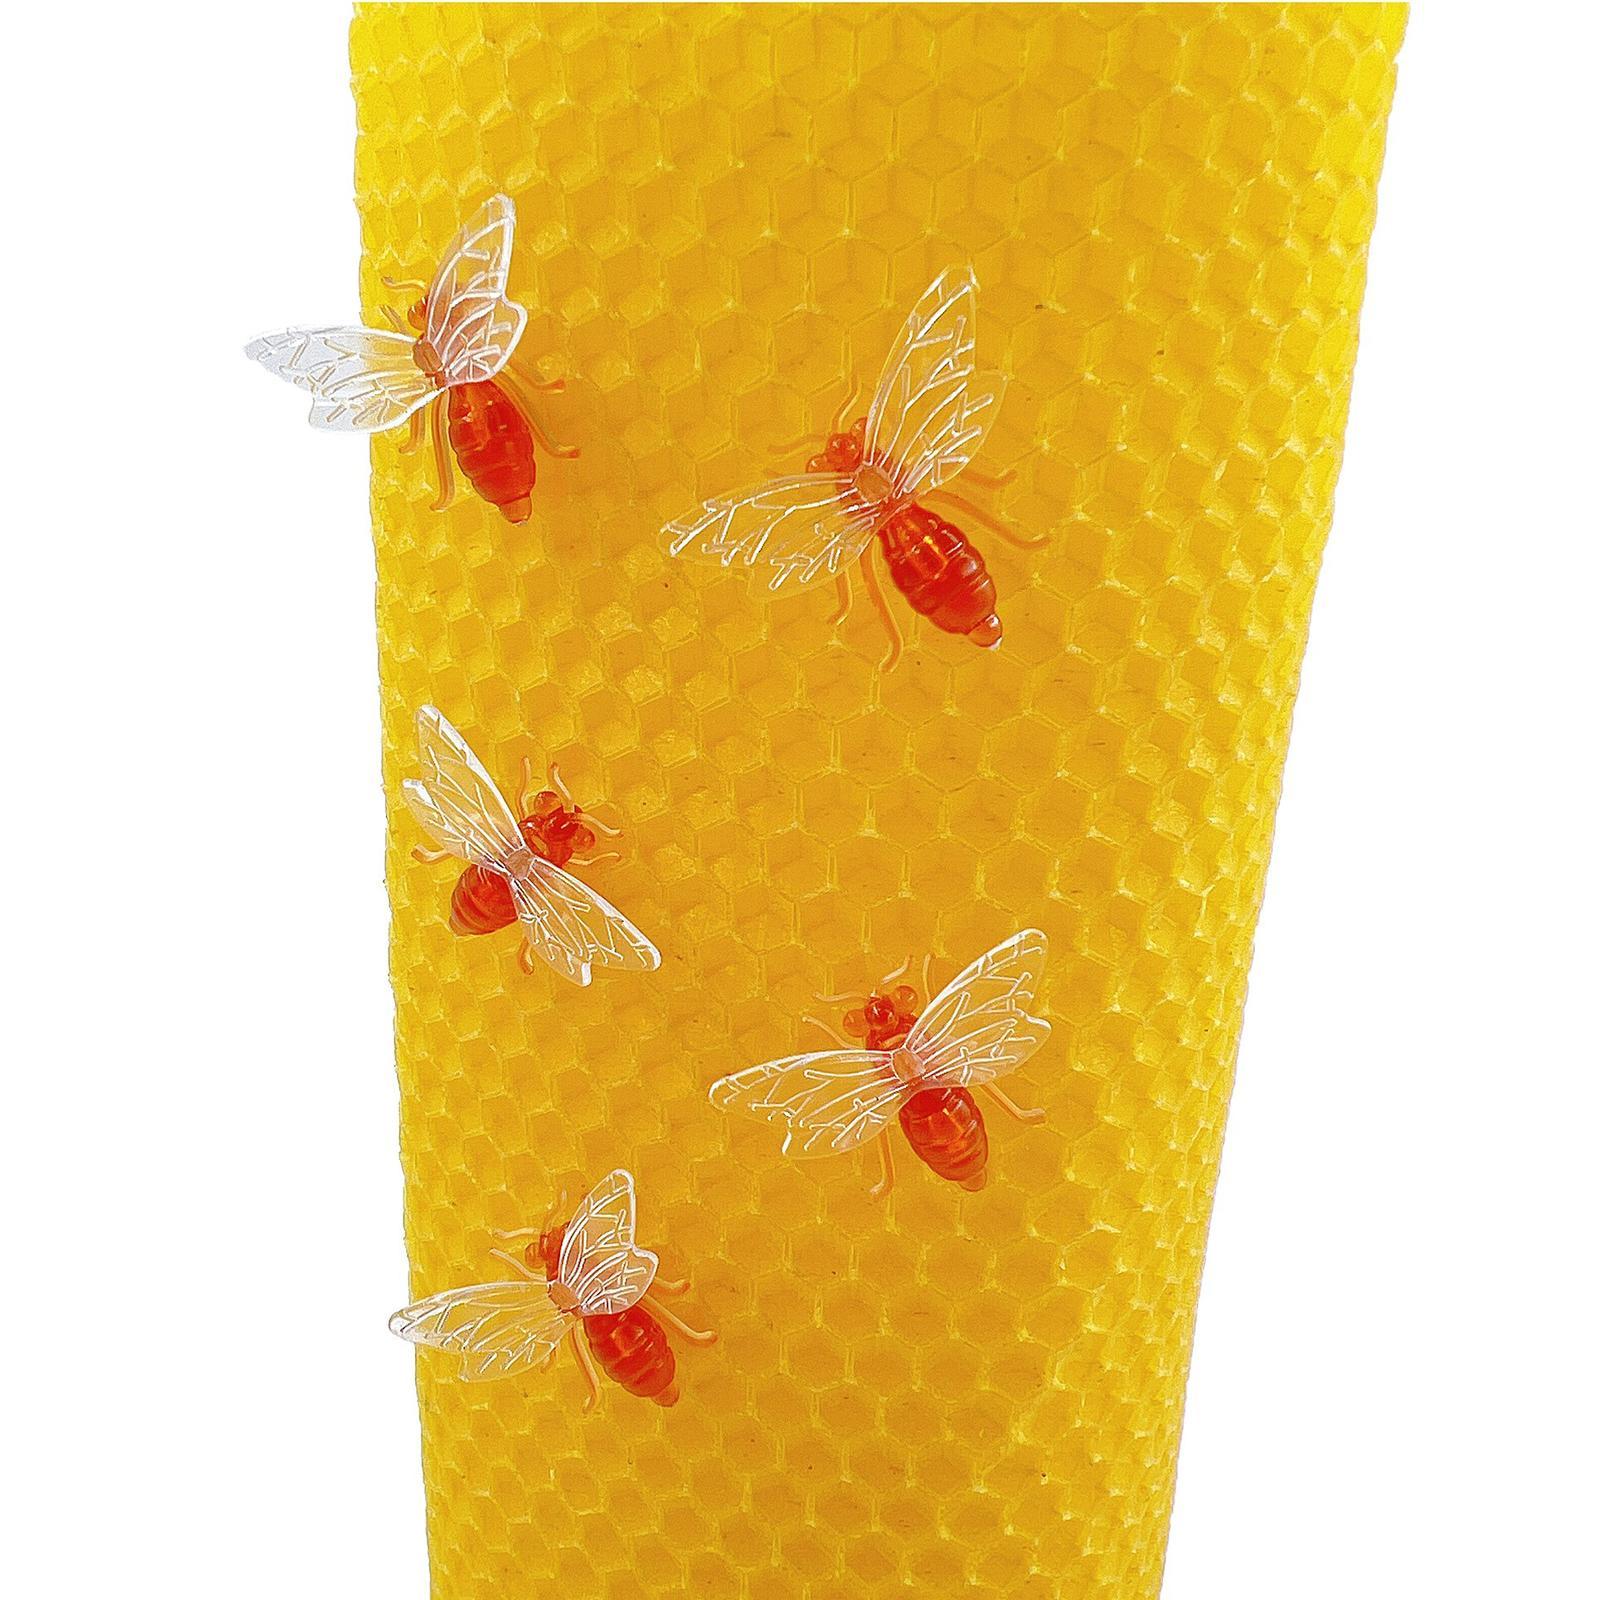 50Pcs Tiny  Bees Ornaments Bee Shaped Embellishments for Vases Wreath